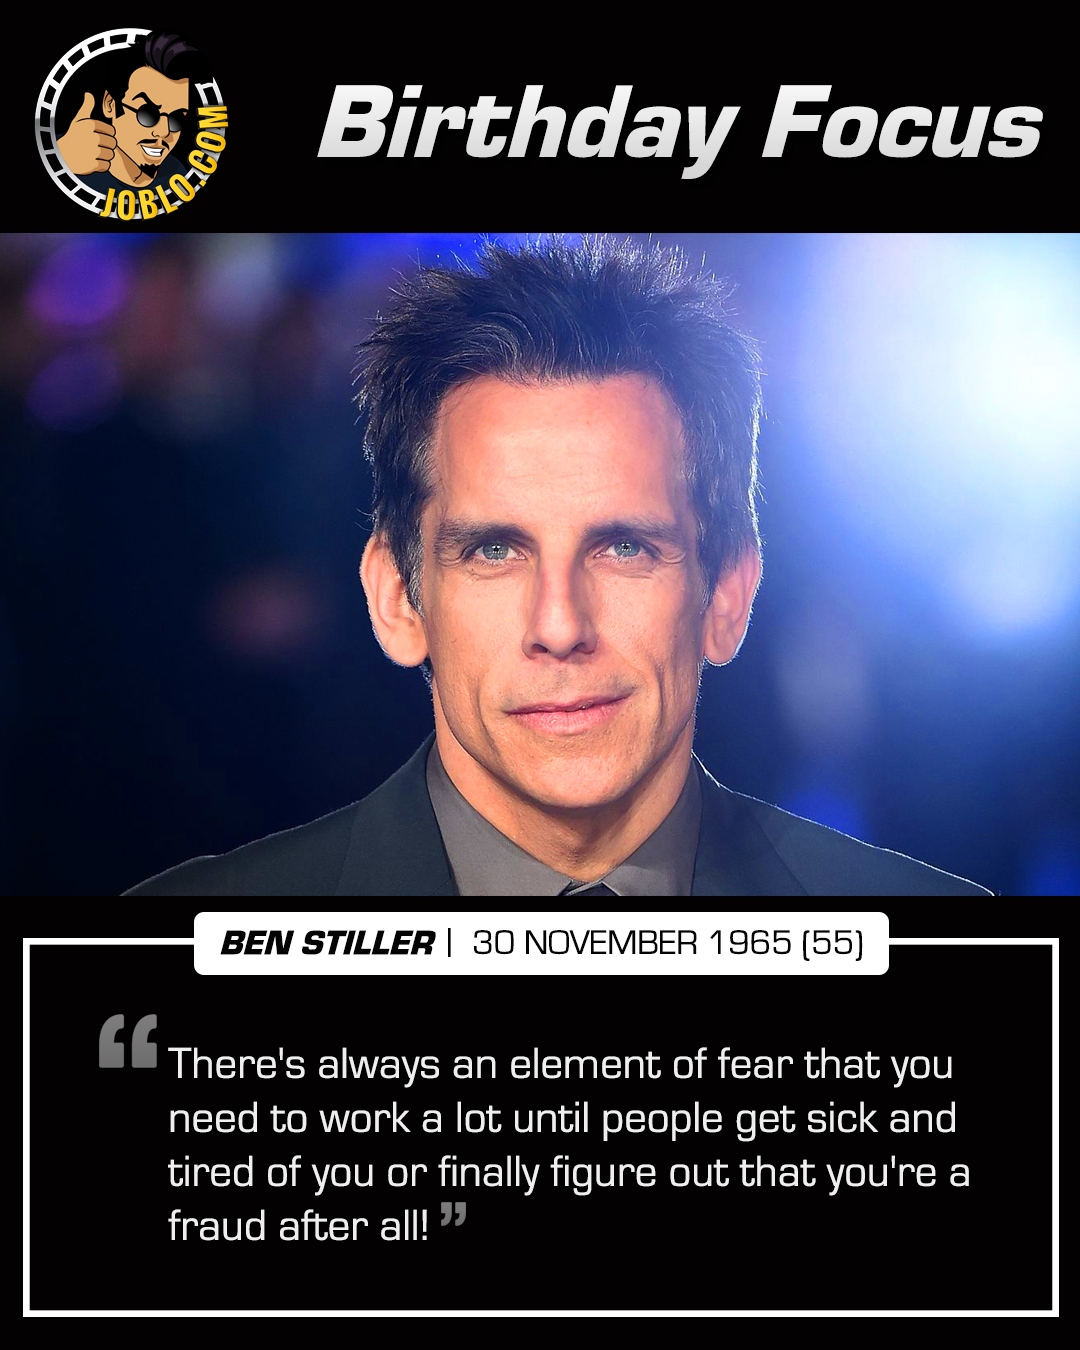 Wishing Ben Stiller a very happy 55th birthday! 